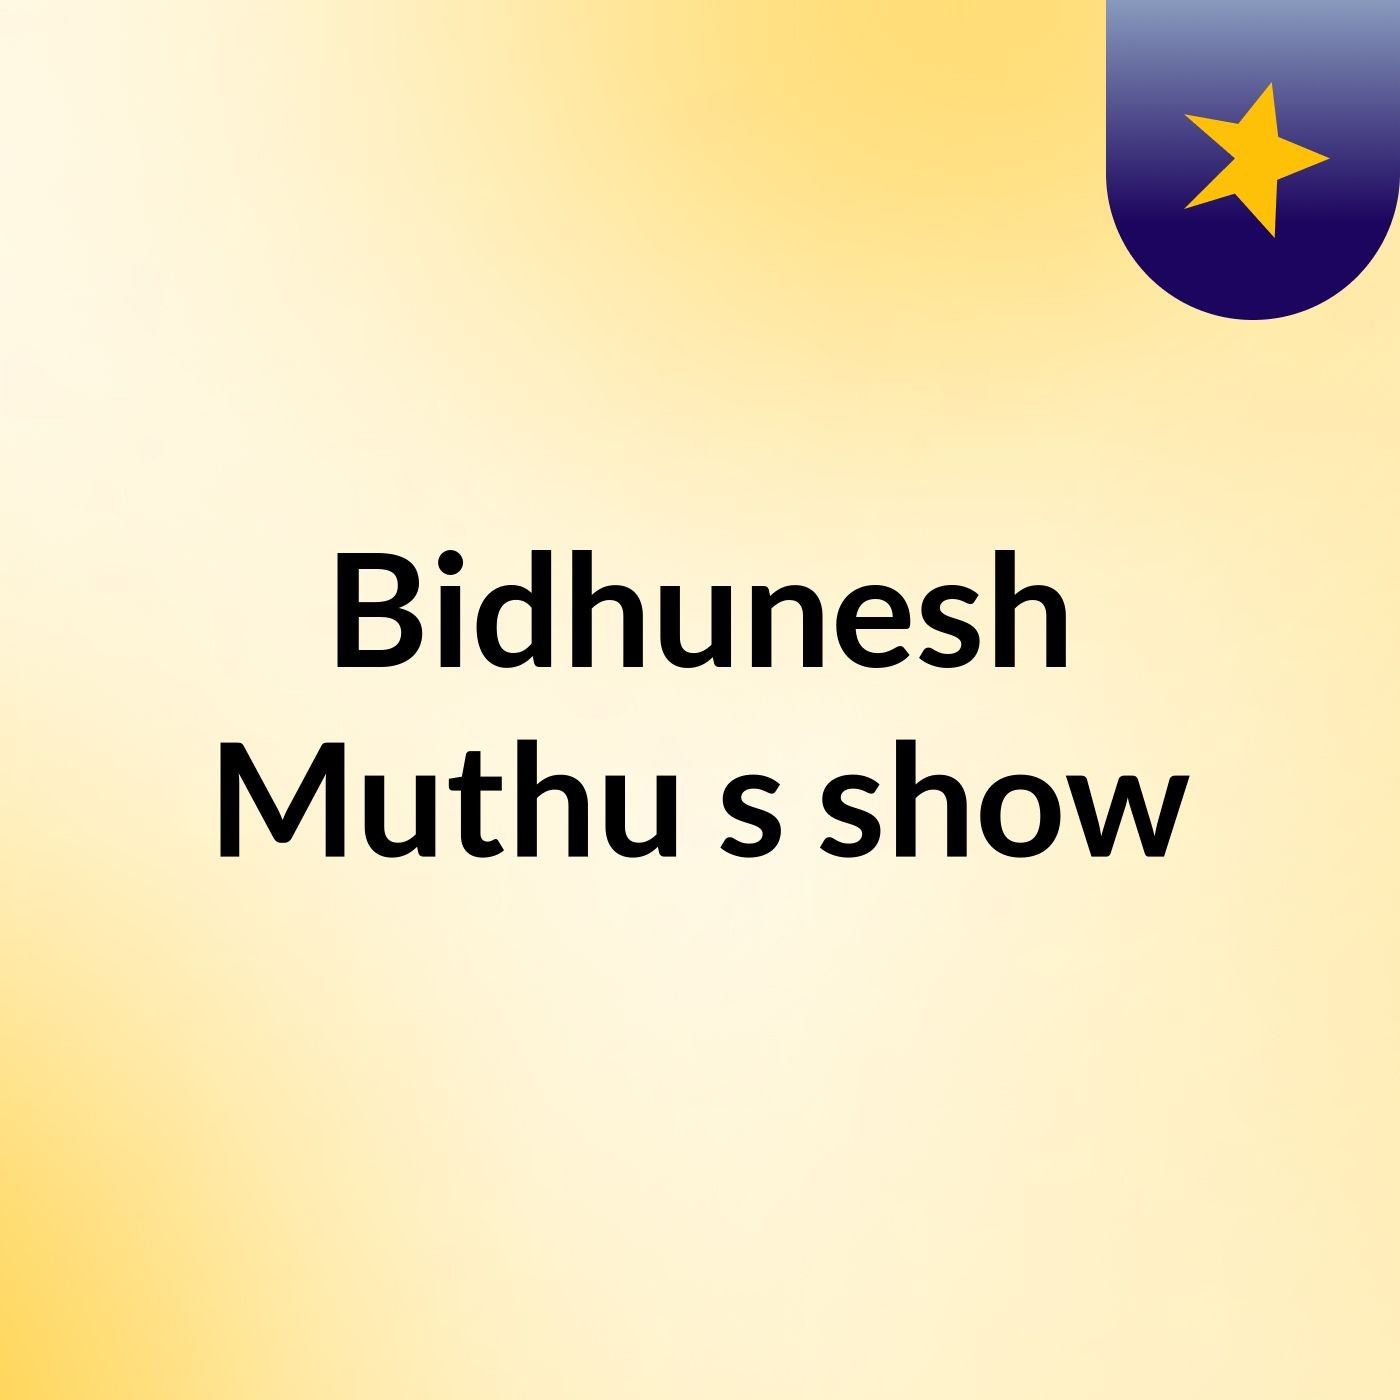 Bidhunesh Muthu's show